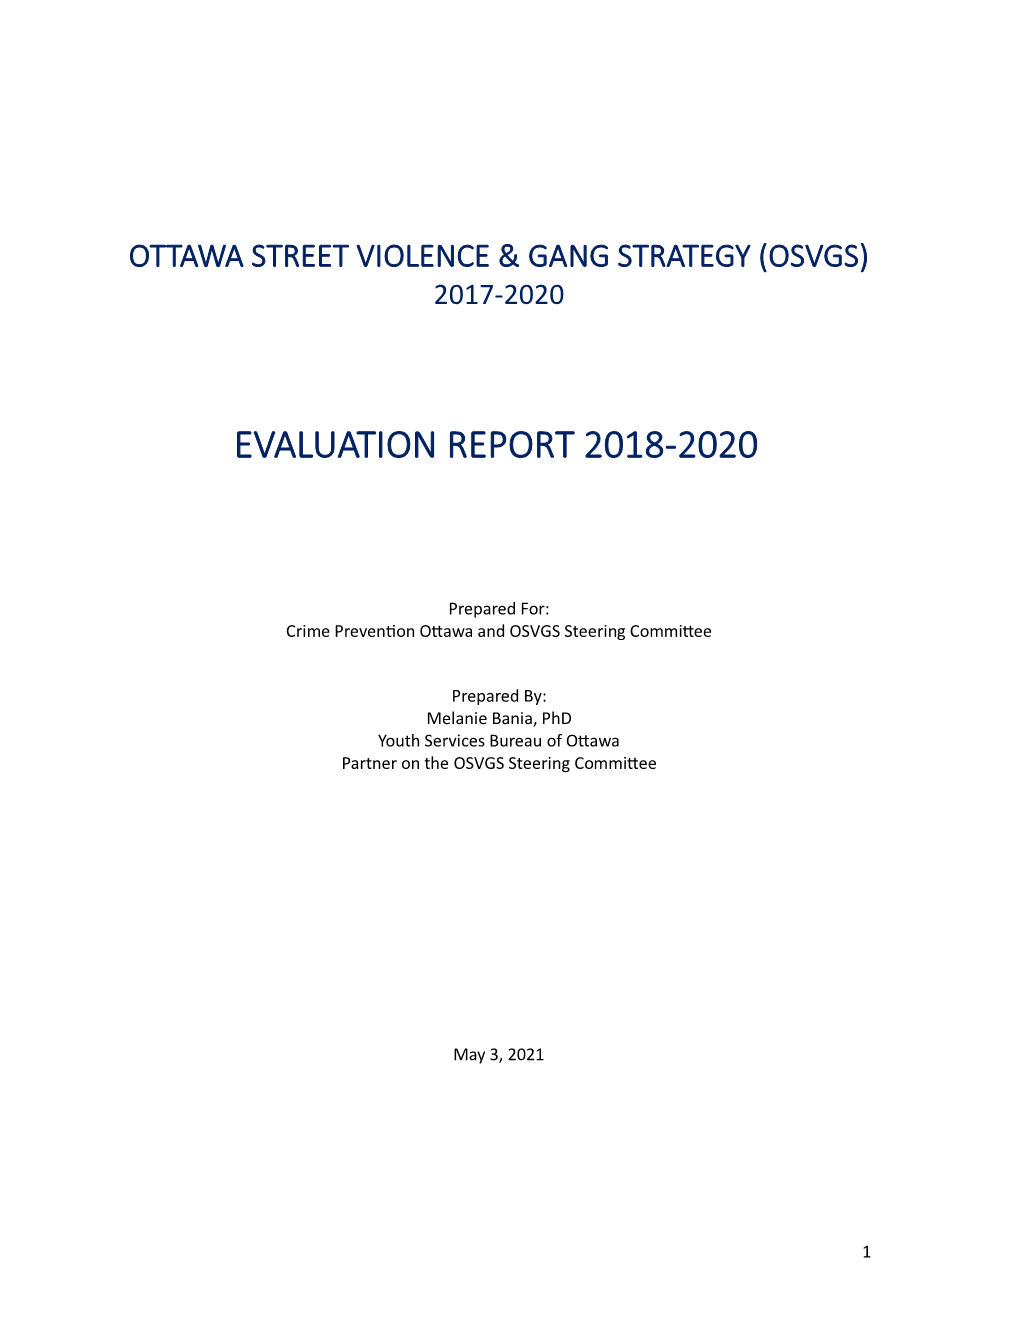 Ottawa Street Violence & Gang Strategy